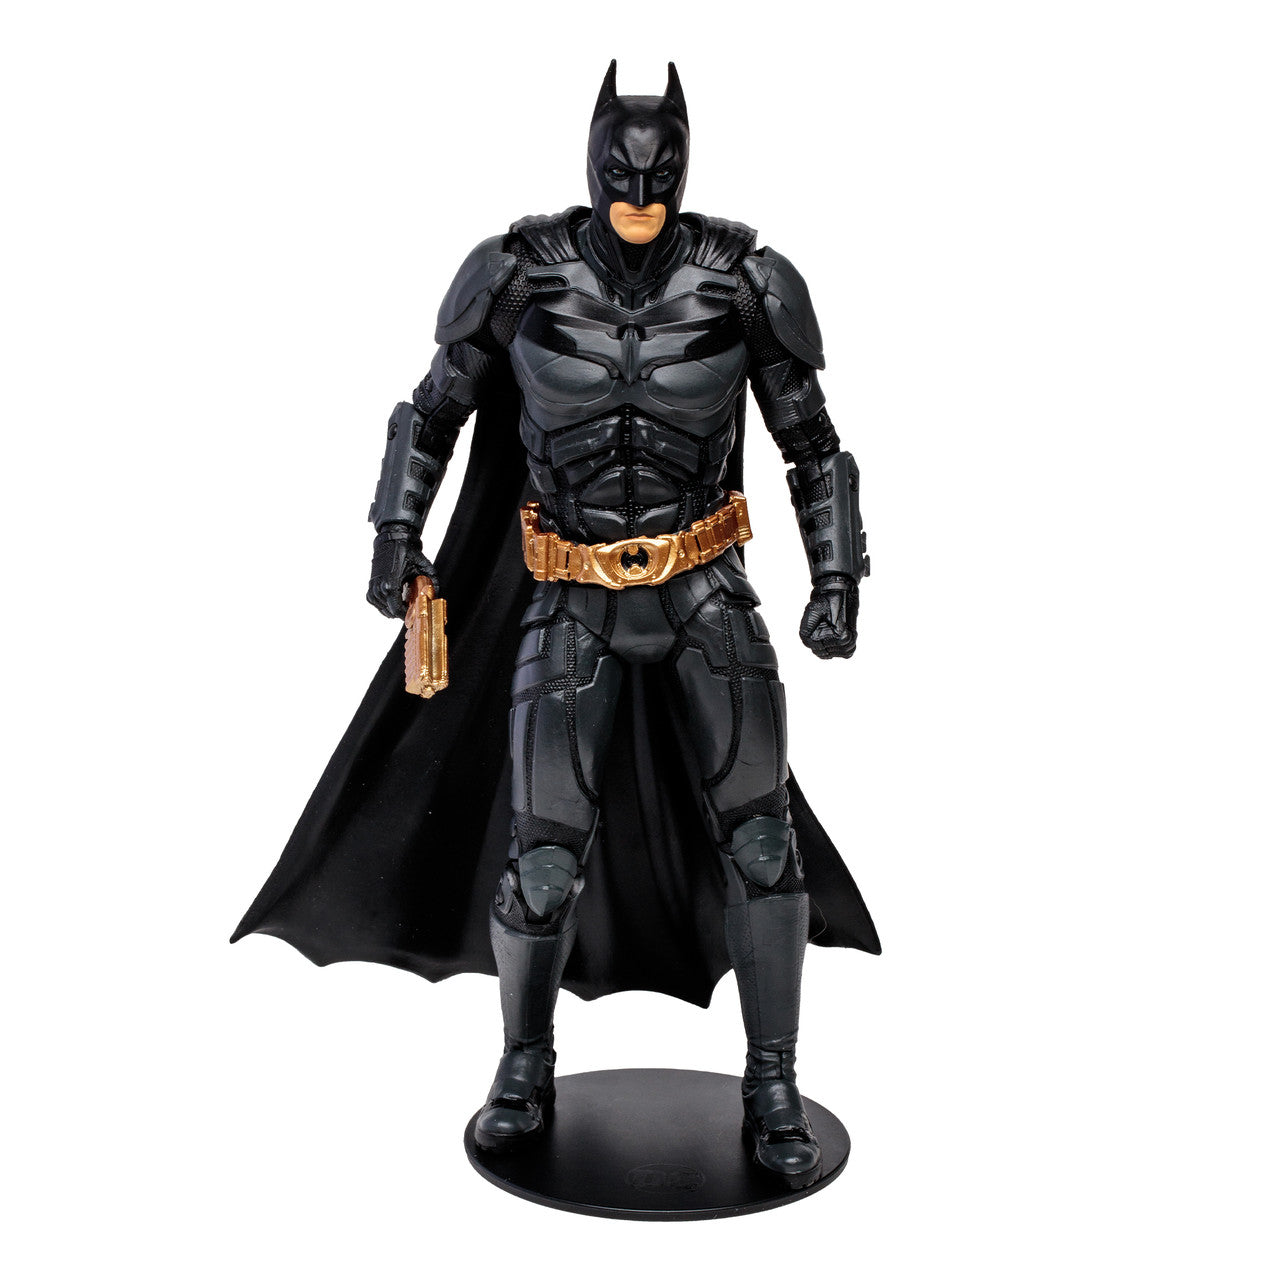 Batman (The Dark Knight Trilogy) 7" Build-A-Figure Series Bane Action Figure by McFarlane Toys -McFarlane Toys - India - www.superherotoystore.com